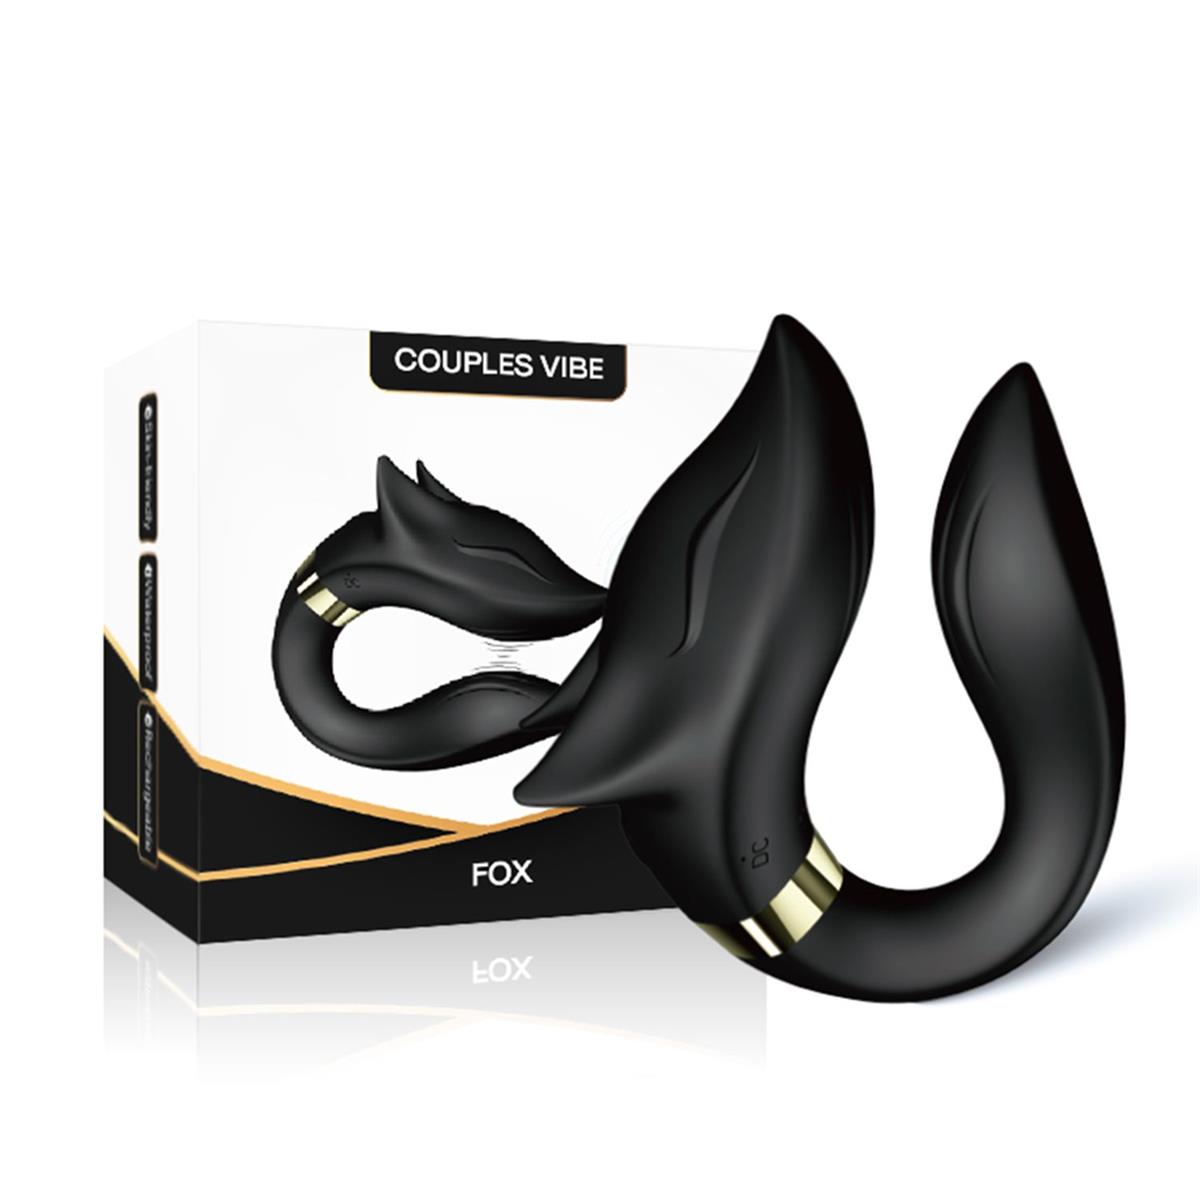 Foxshow - Fox black - 52-00029-1 - USB - 9 vibration modes - Luxury Giftbox - Black